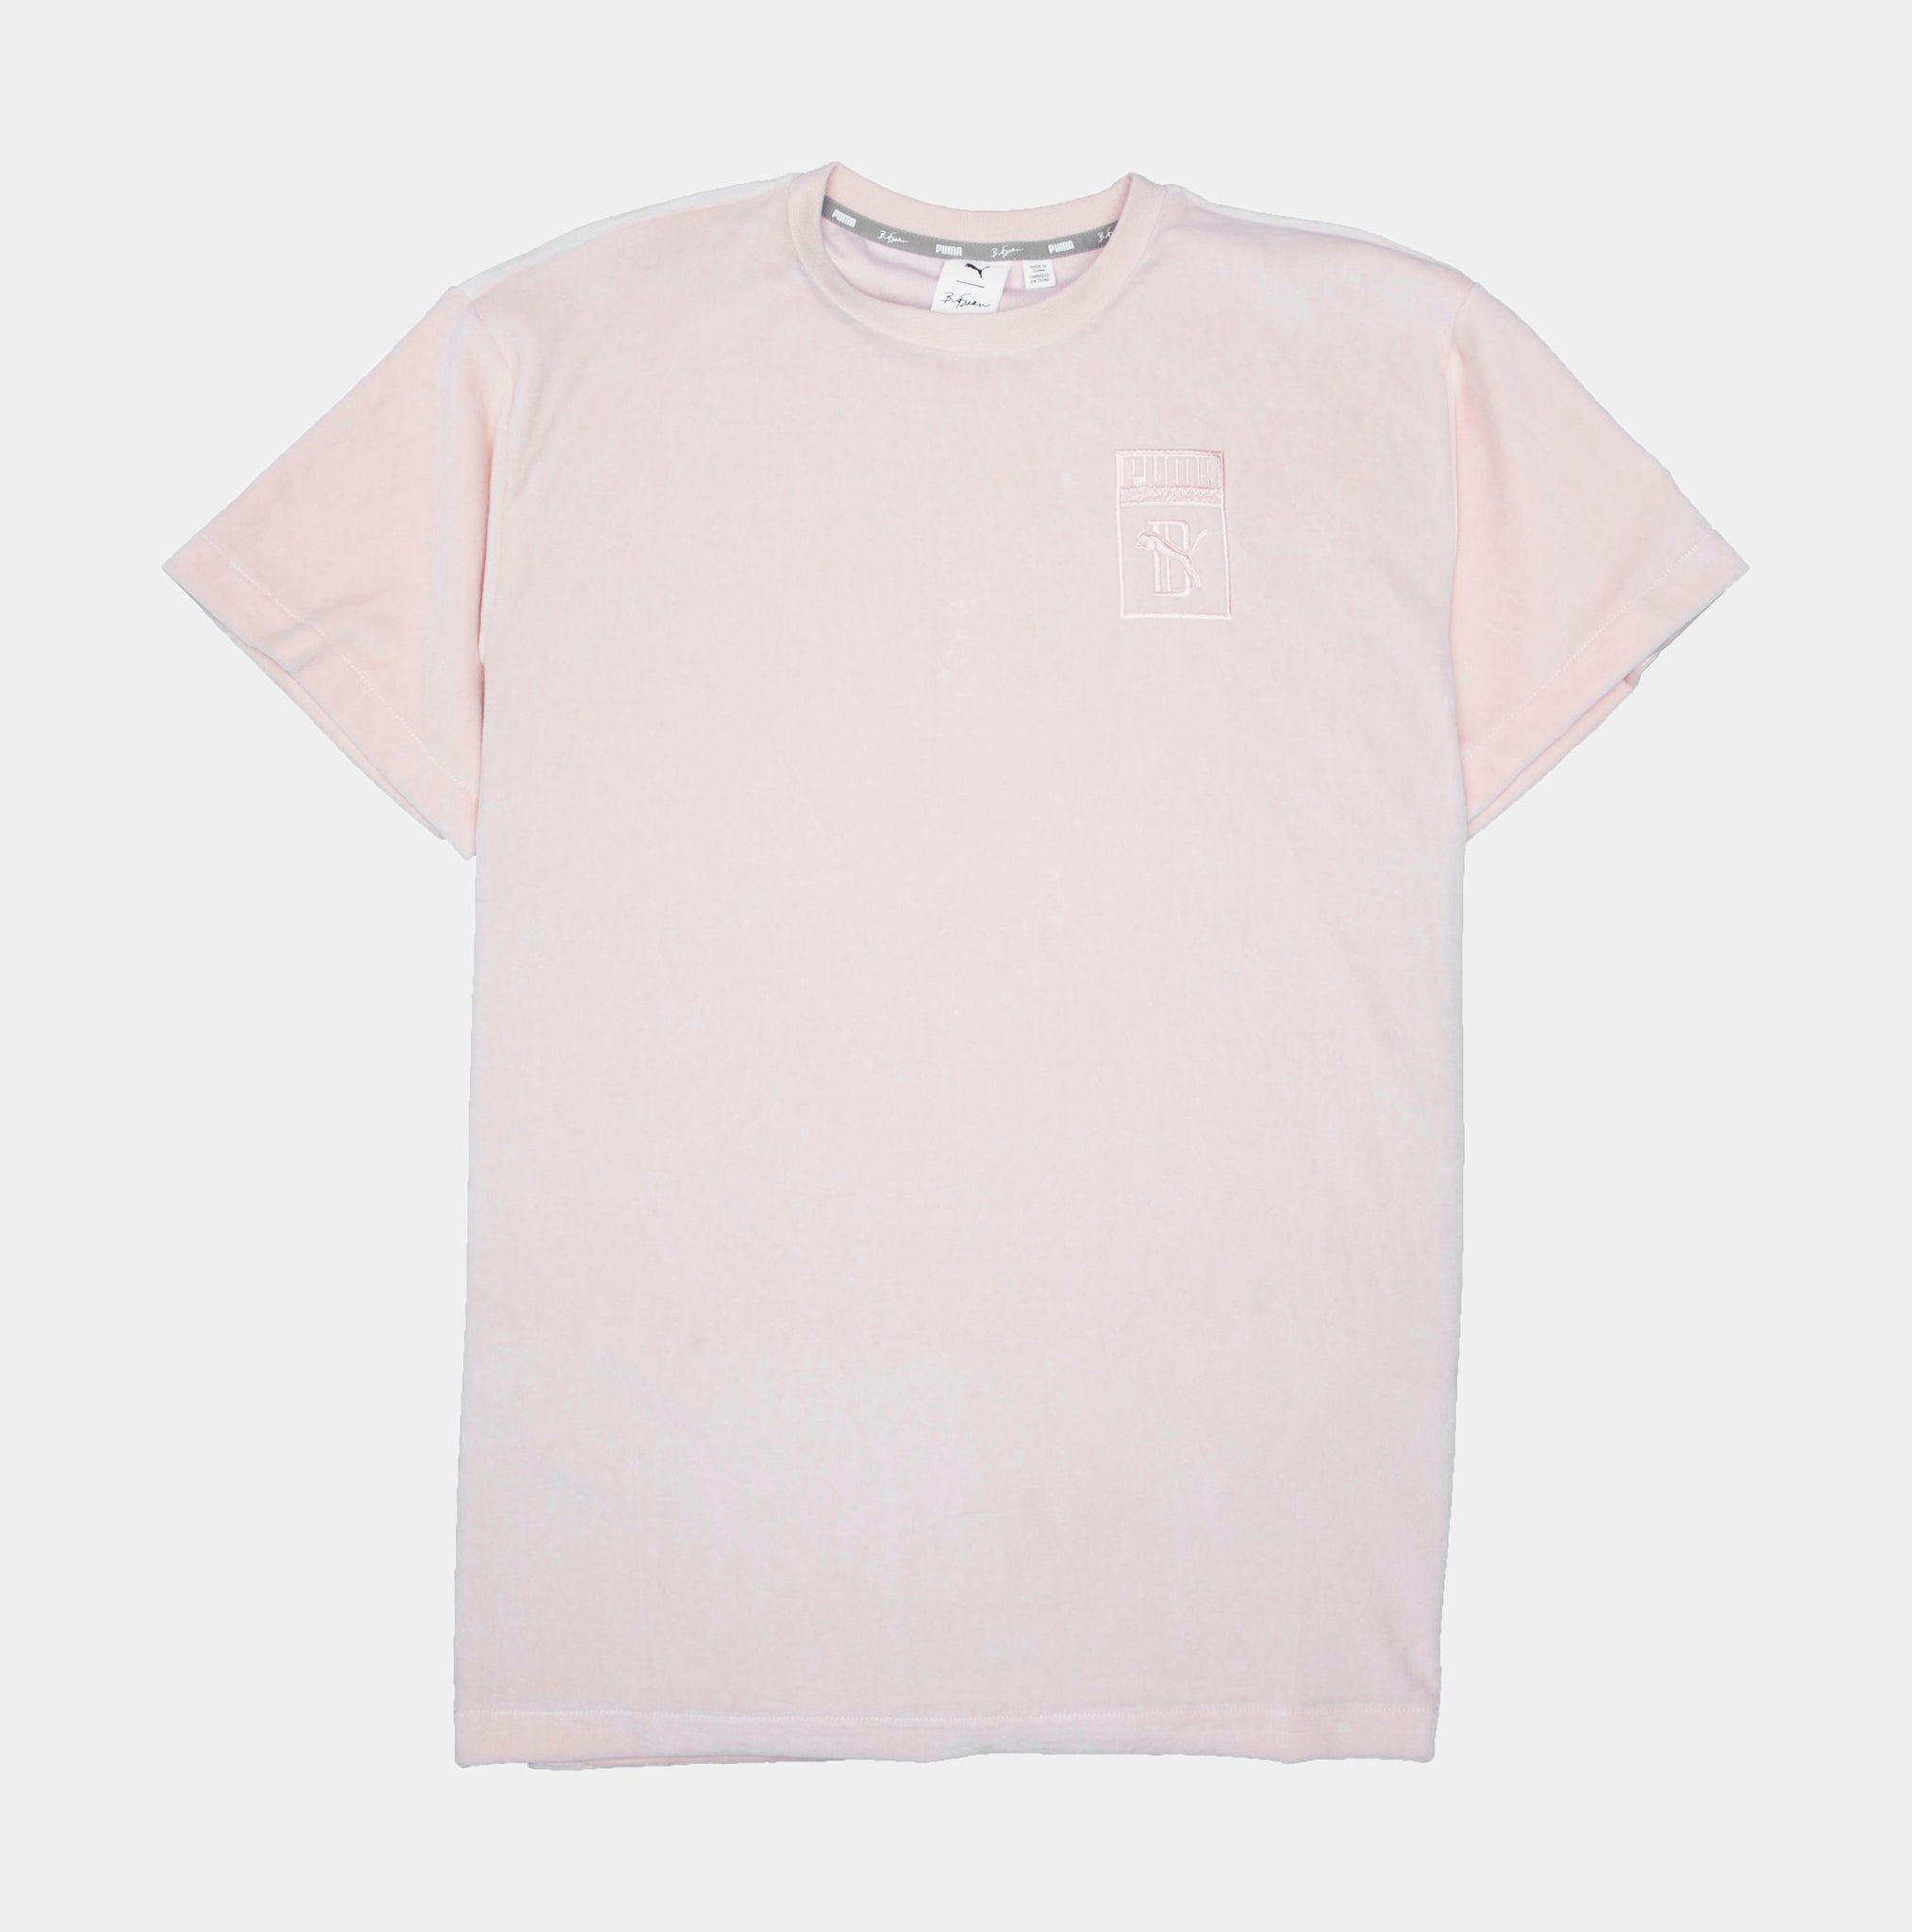 PUMA PUMA x Big Sean Collection Mens T-Shirt Pink Free Shipping 575918 85 –  Shoe Palace